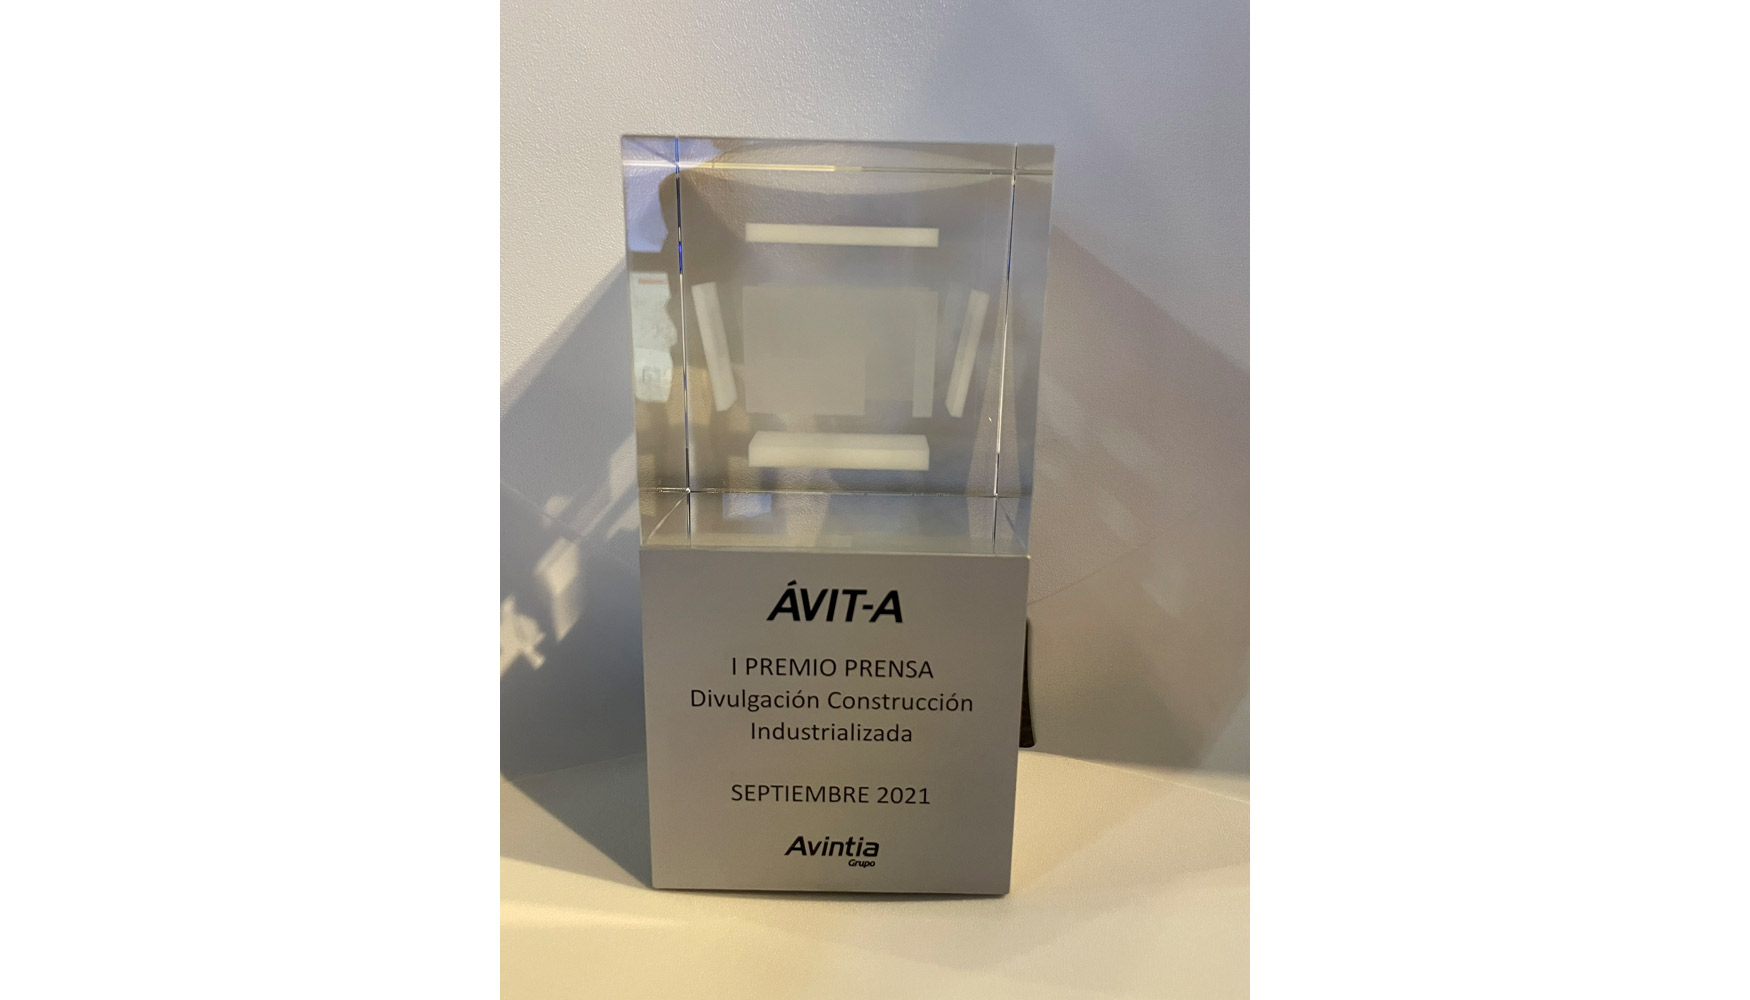 Detalle del premio otorgado por Grupo Avintia a Interempresas